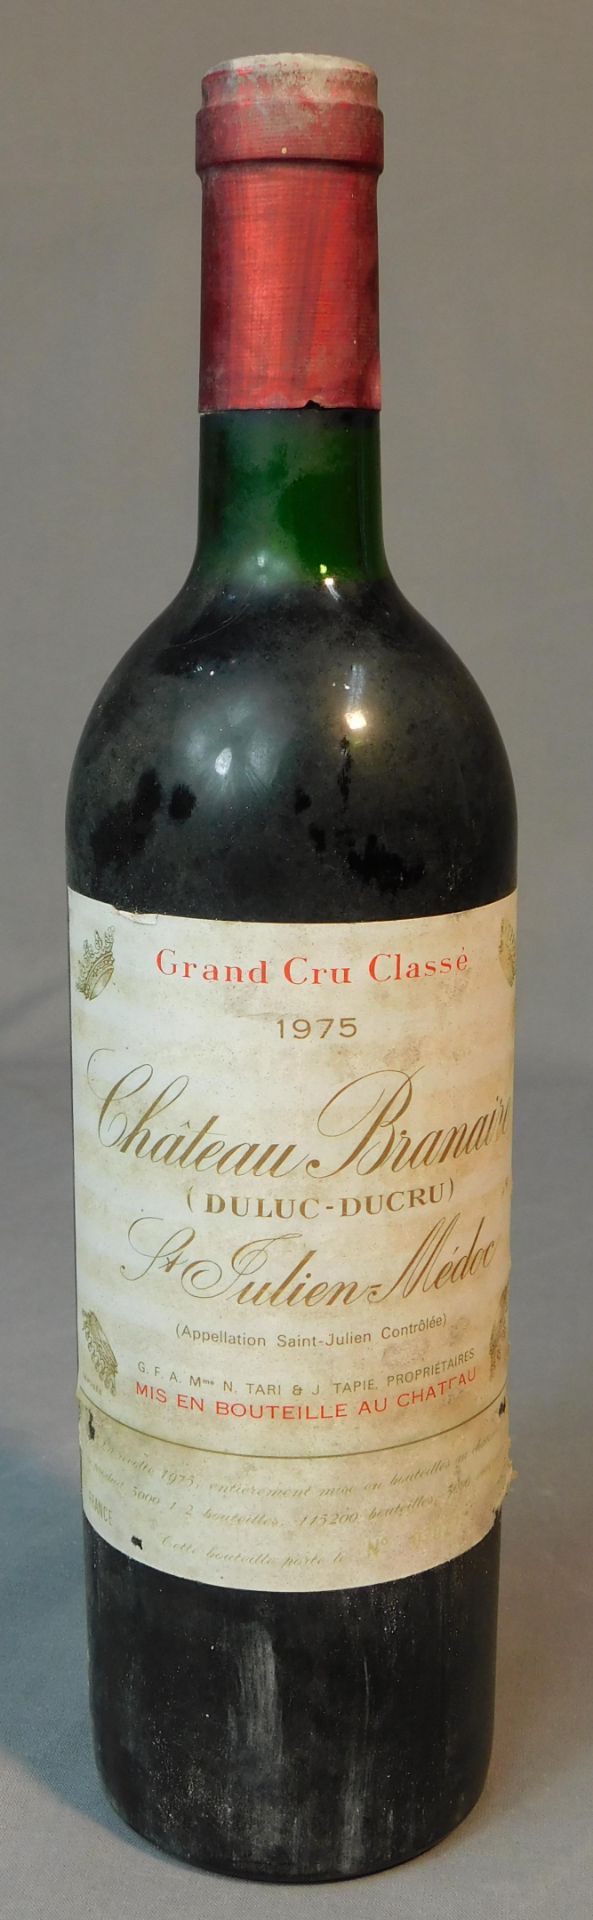 3 Flaschen Bordeaux Grand Cru Classé. Rotwein Frankreich. - Image 10 of 18